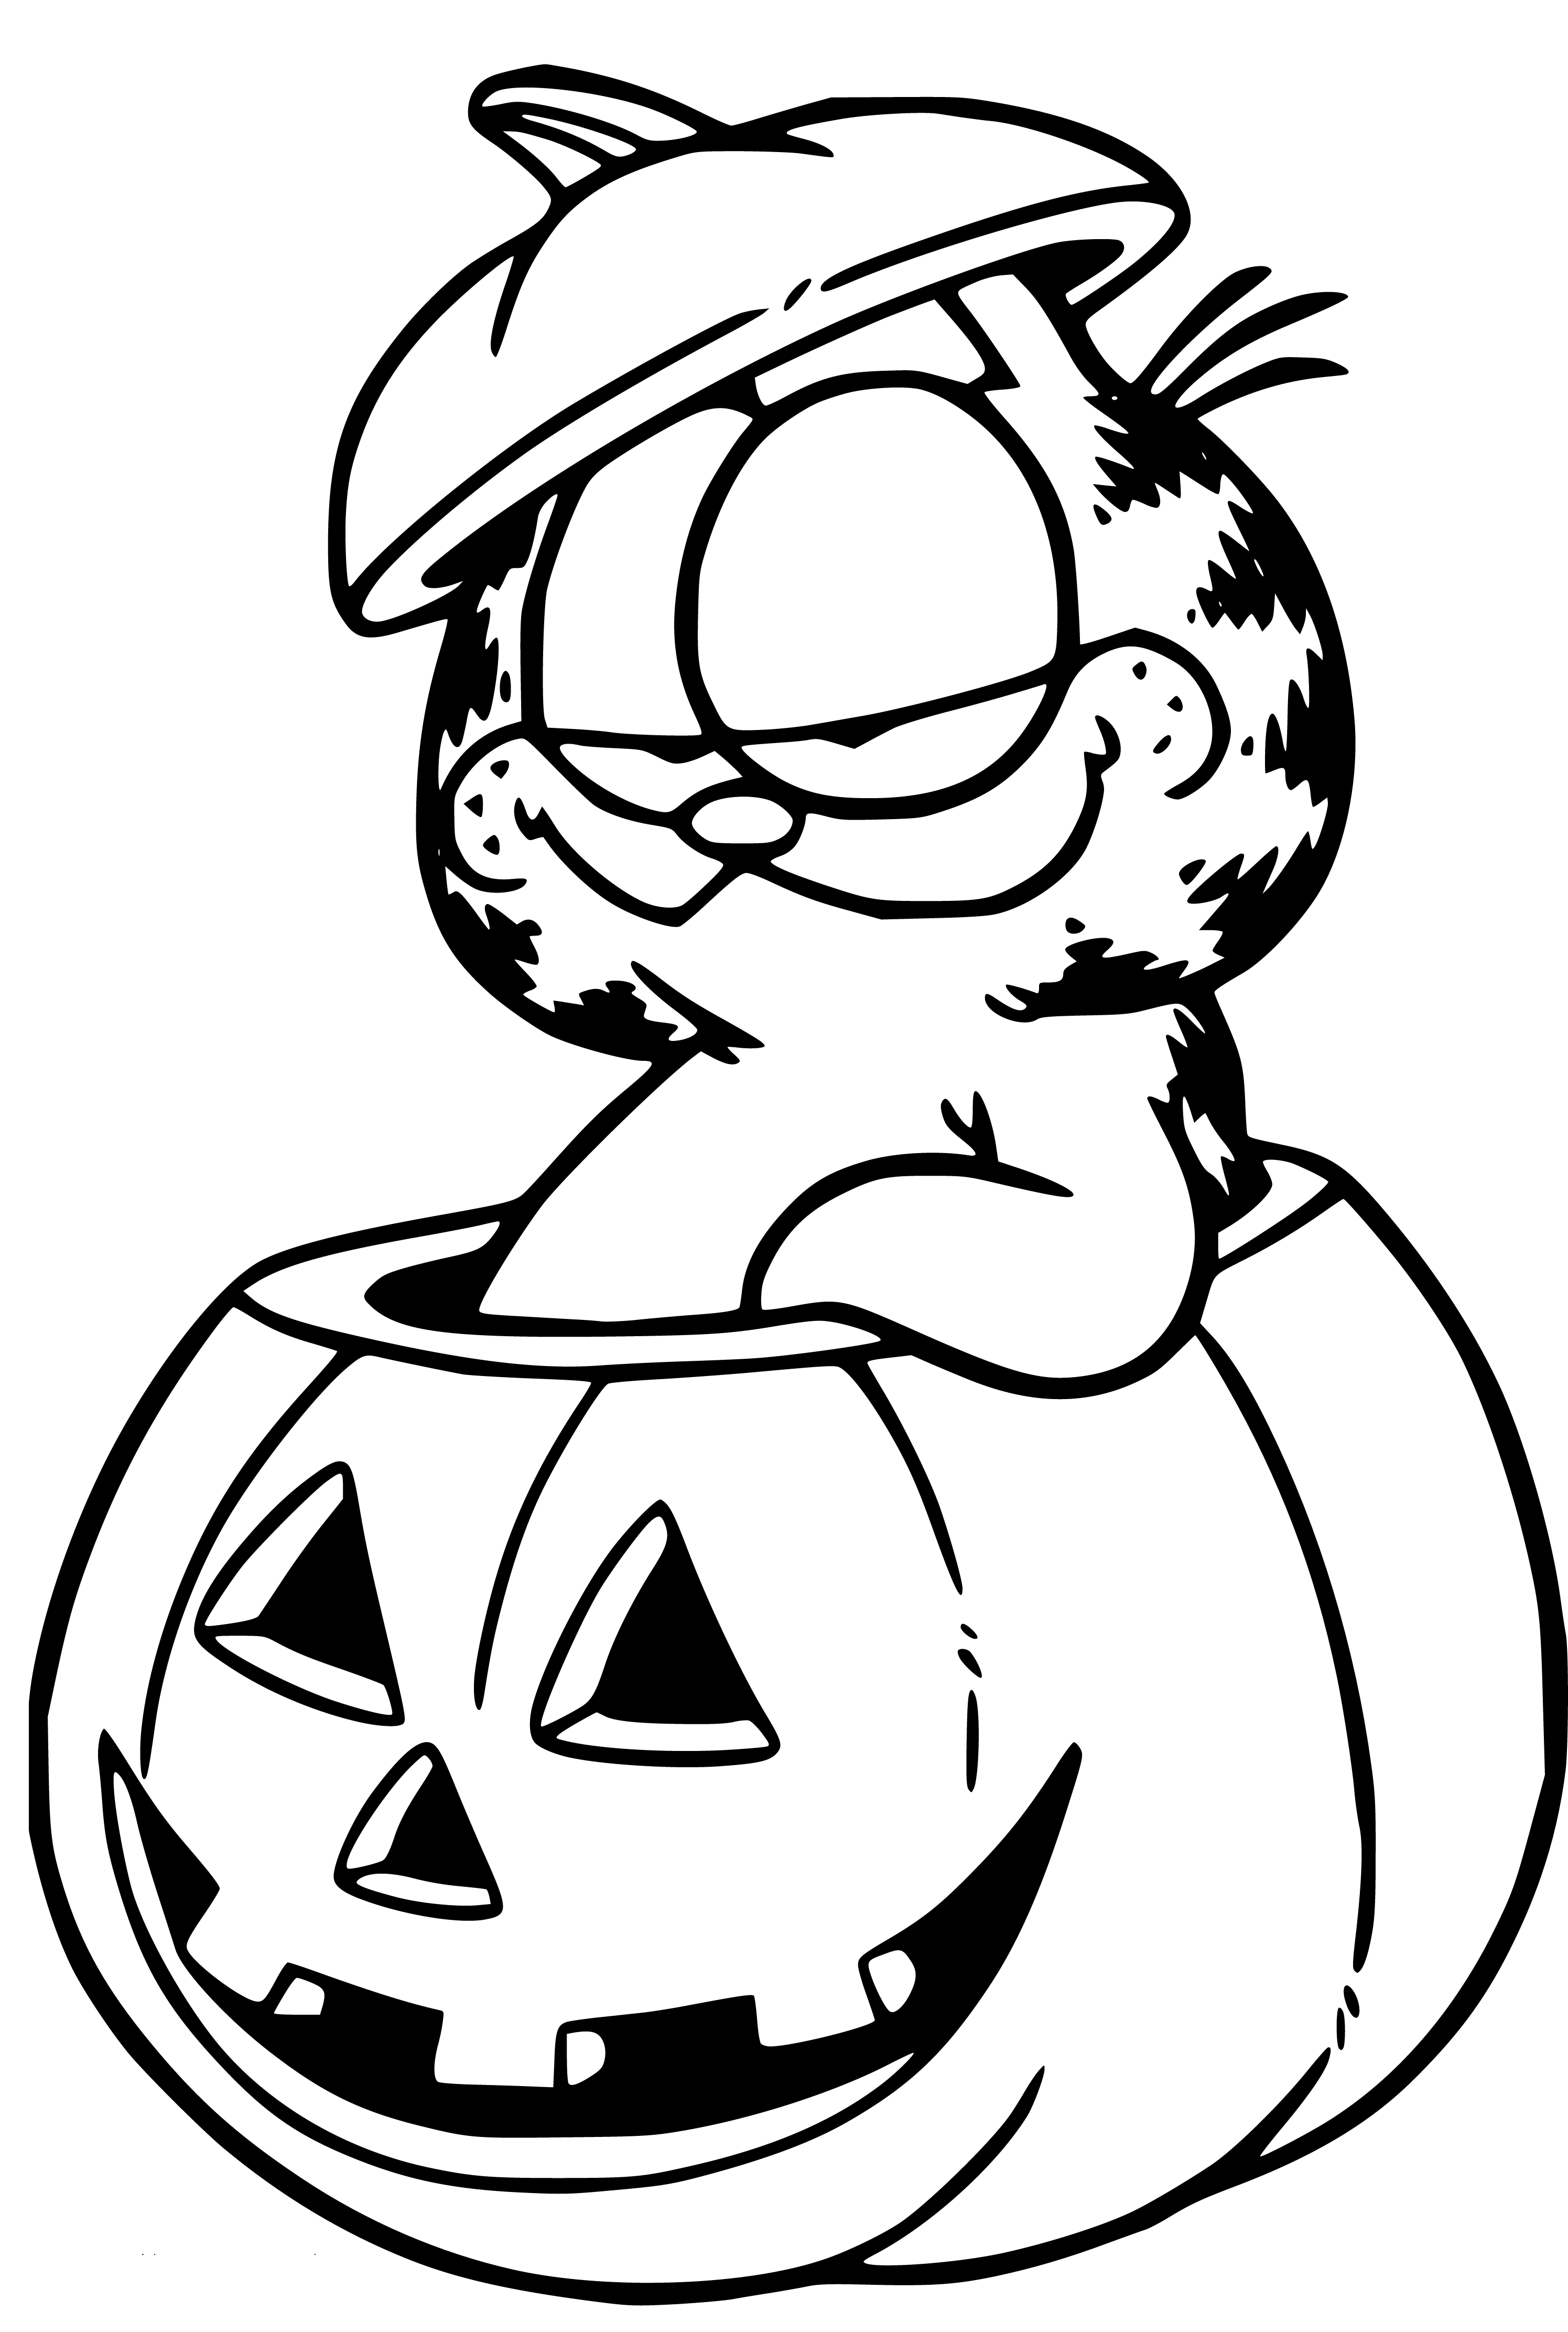 Garfield Halloween Pumpkin Coloring Sheet to Print - SheetalColor.com